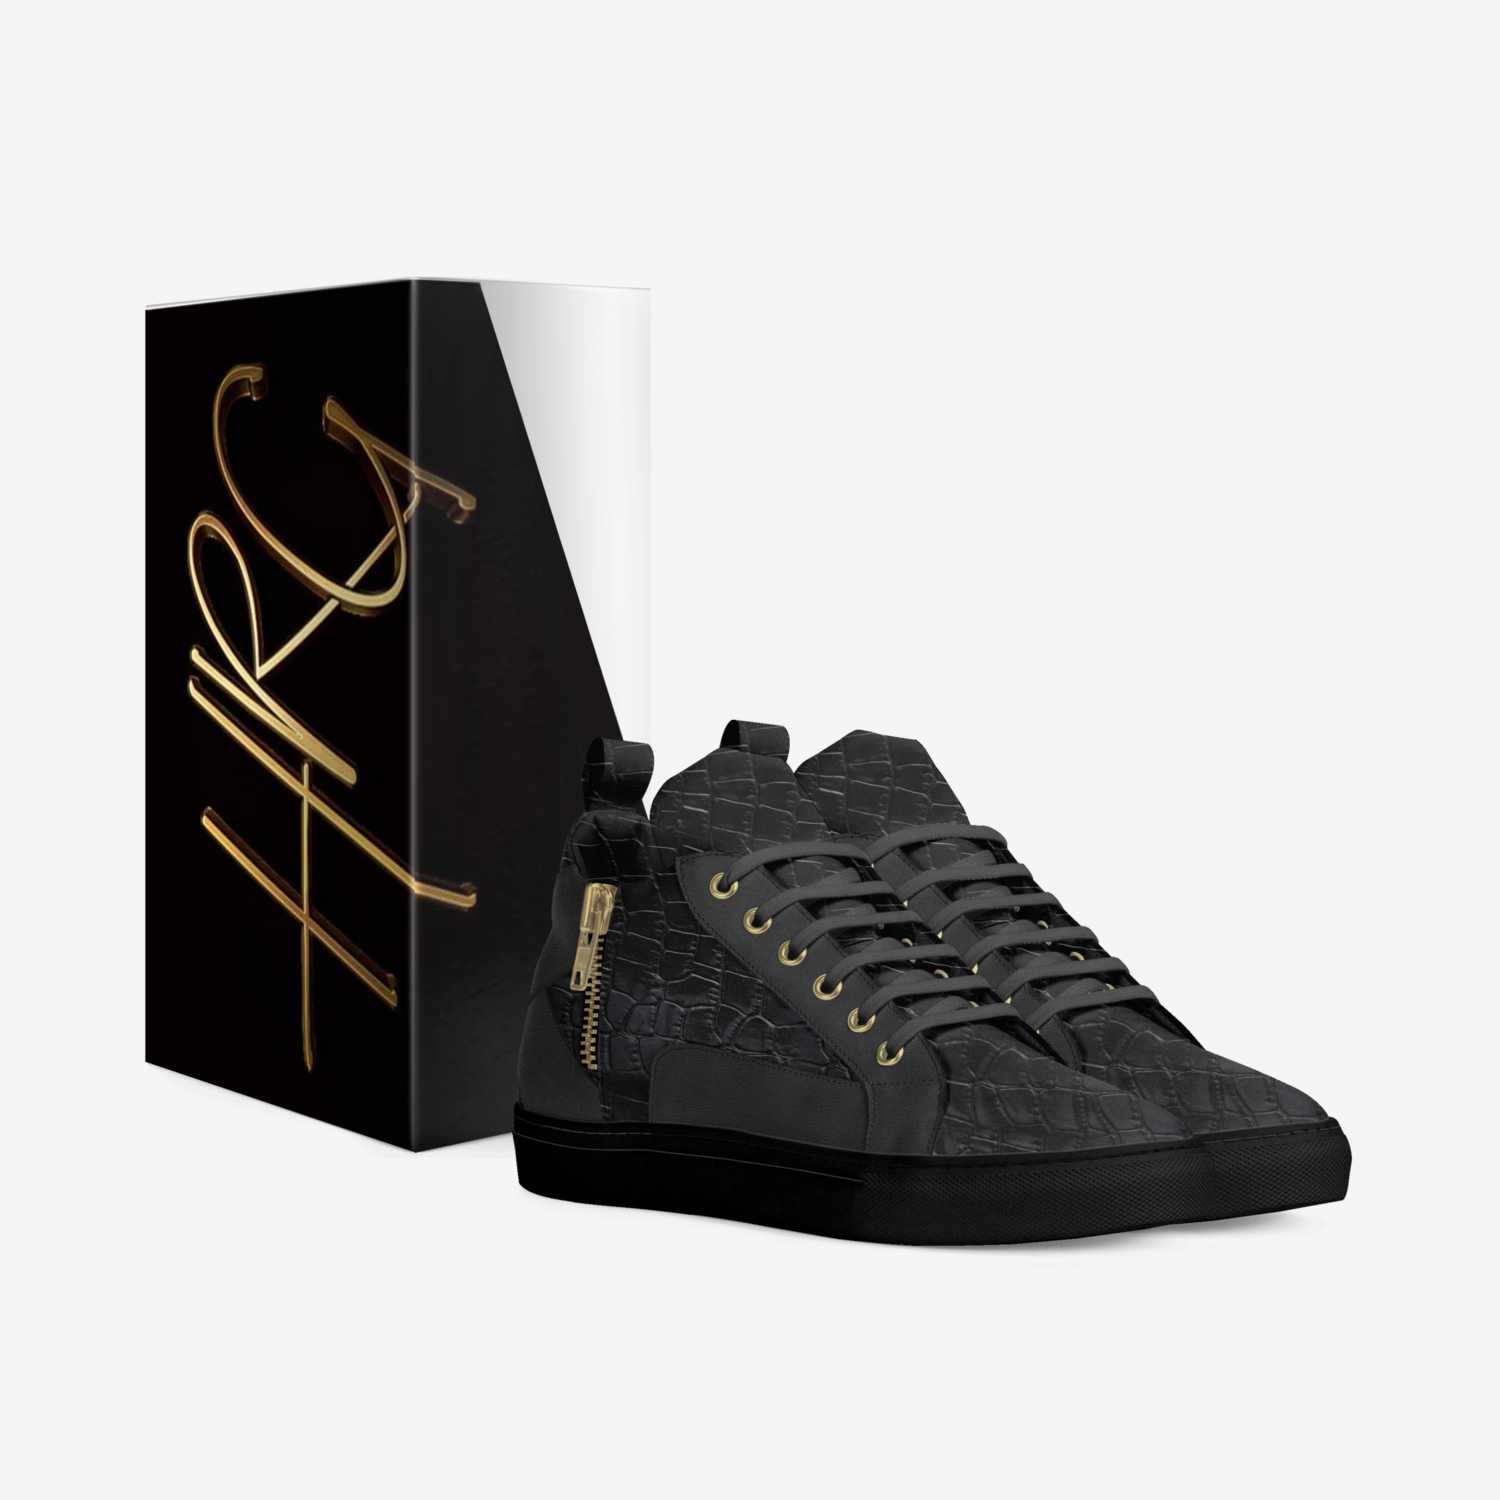 Dark Nights 3 custom made in Italy shoes by Harold Gray | Box view